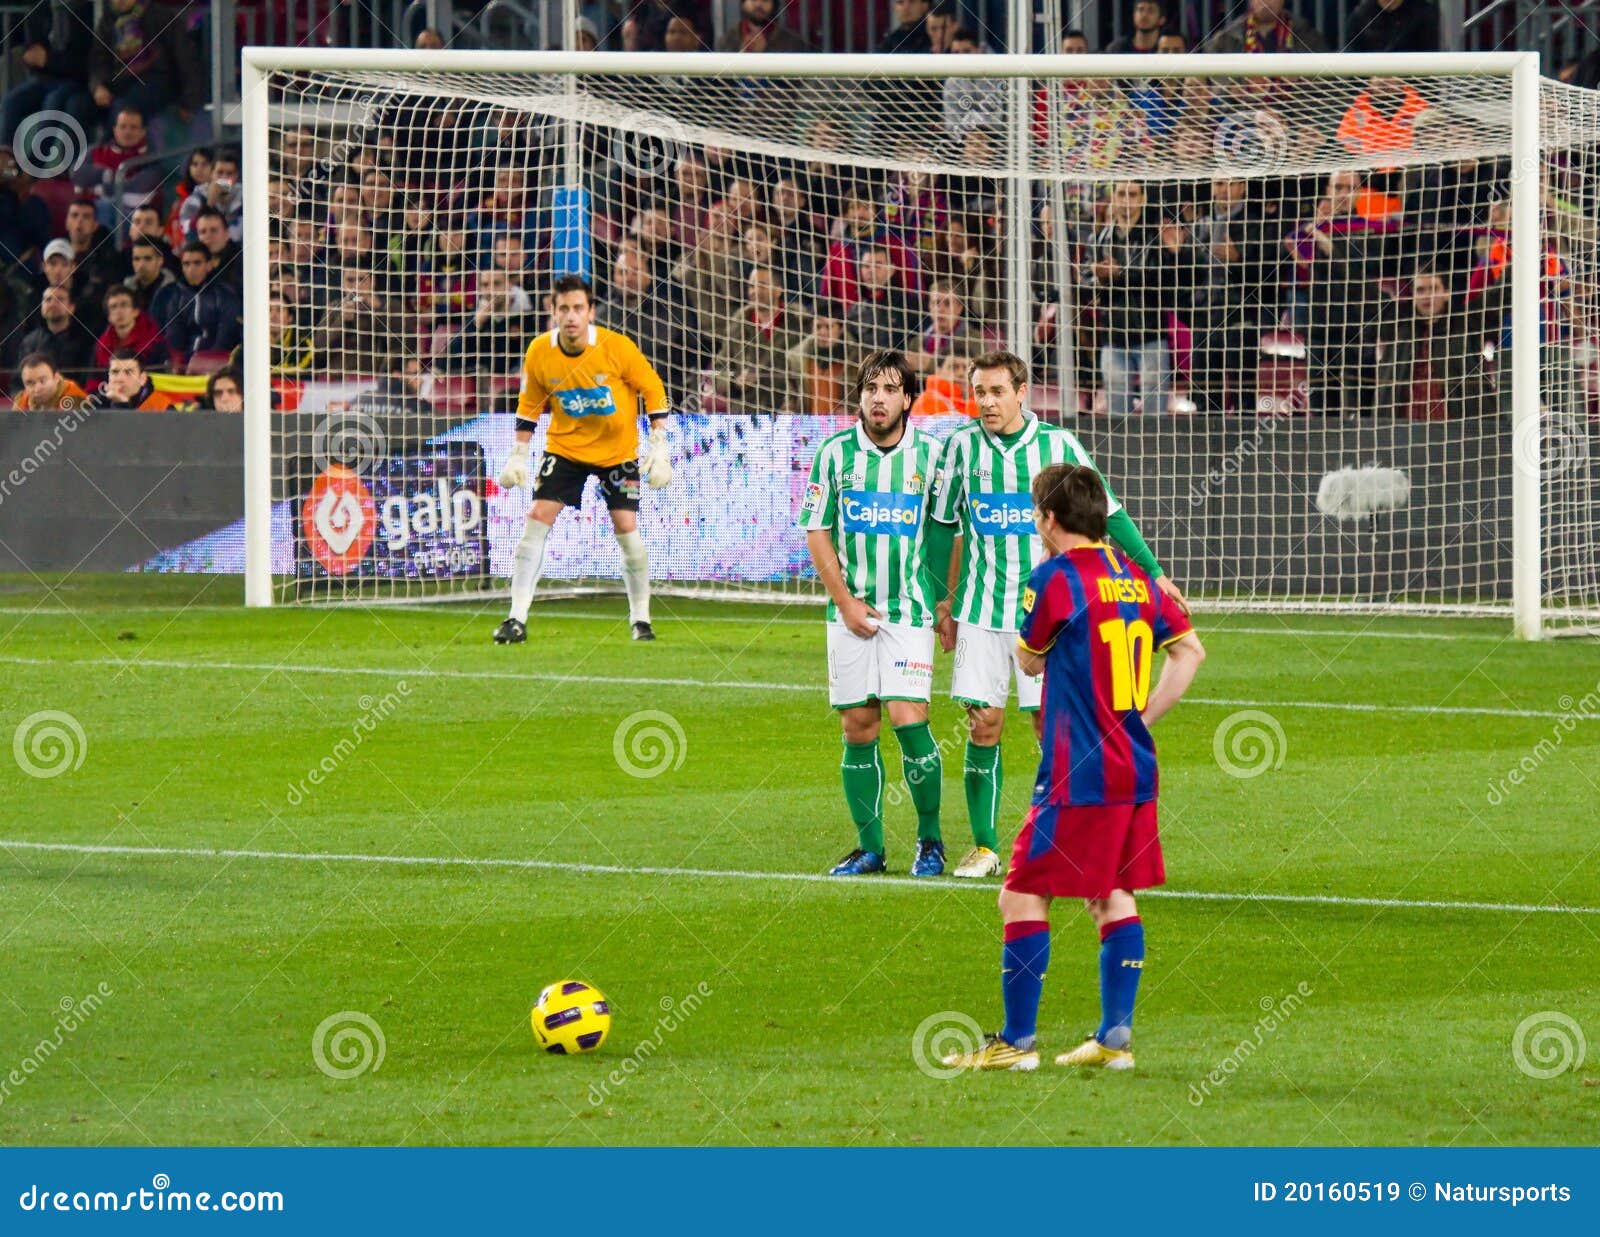 Leo Messi Shooting a Free Kick Editorial Stock Image - Image of stadium,  soccer: 20160519